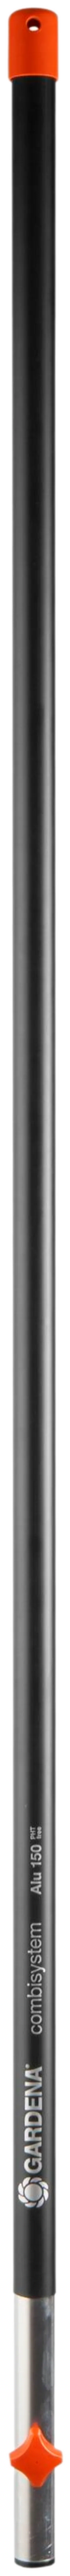 Gardena Combisystem-alumiinivarsi 130 cm, suora - 1